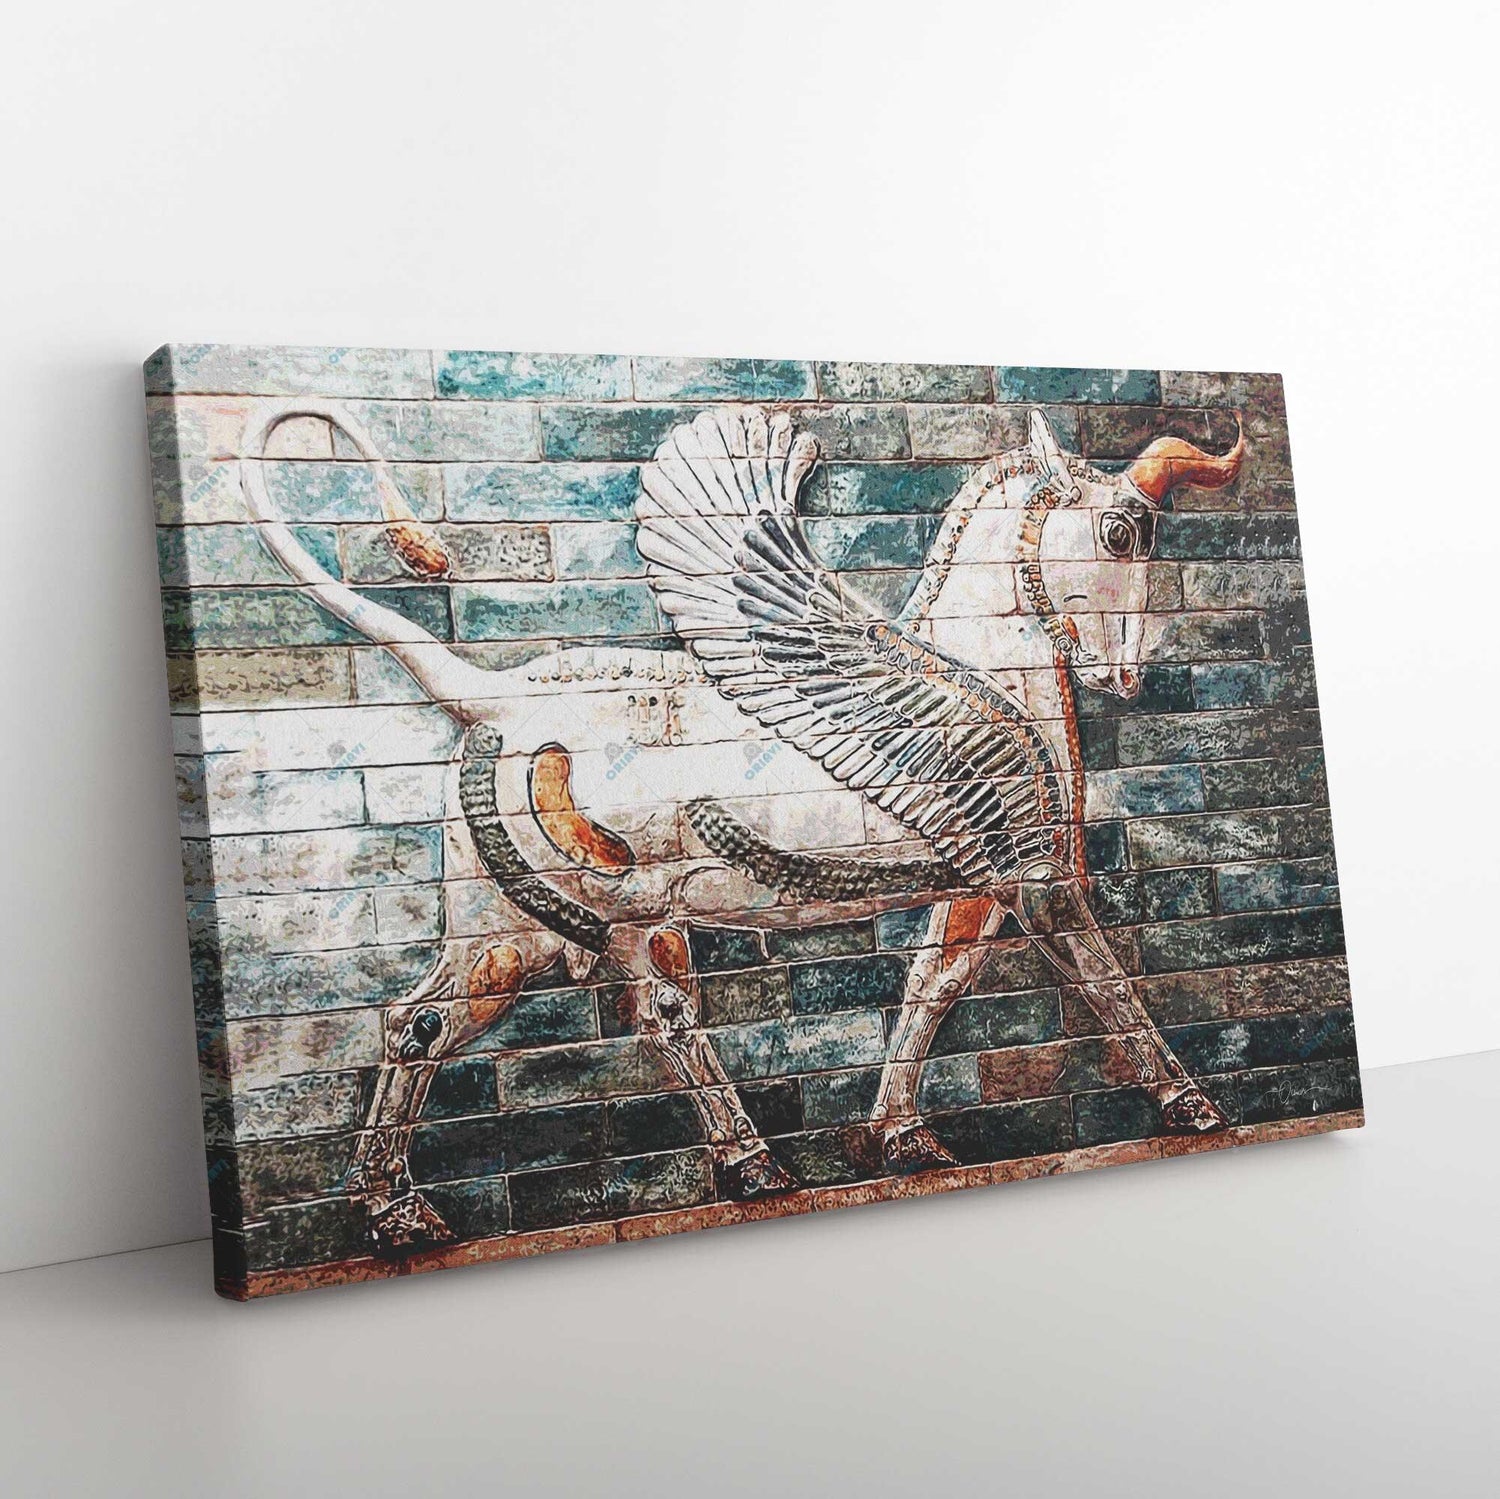 Unicorn from Apadana | Persian Wall Art - ORIAVI Persian Art, persian artwork for sale, persian calligraphy, persian calligraphy wall art, persian mix media wall art, persian painting, persian wall art